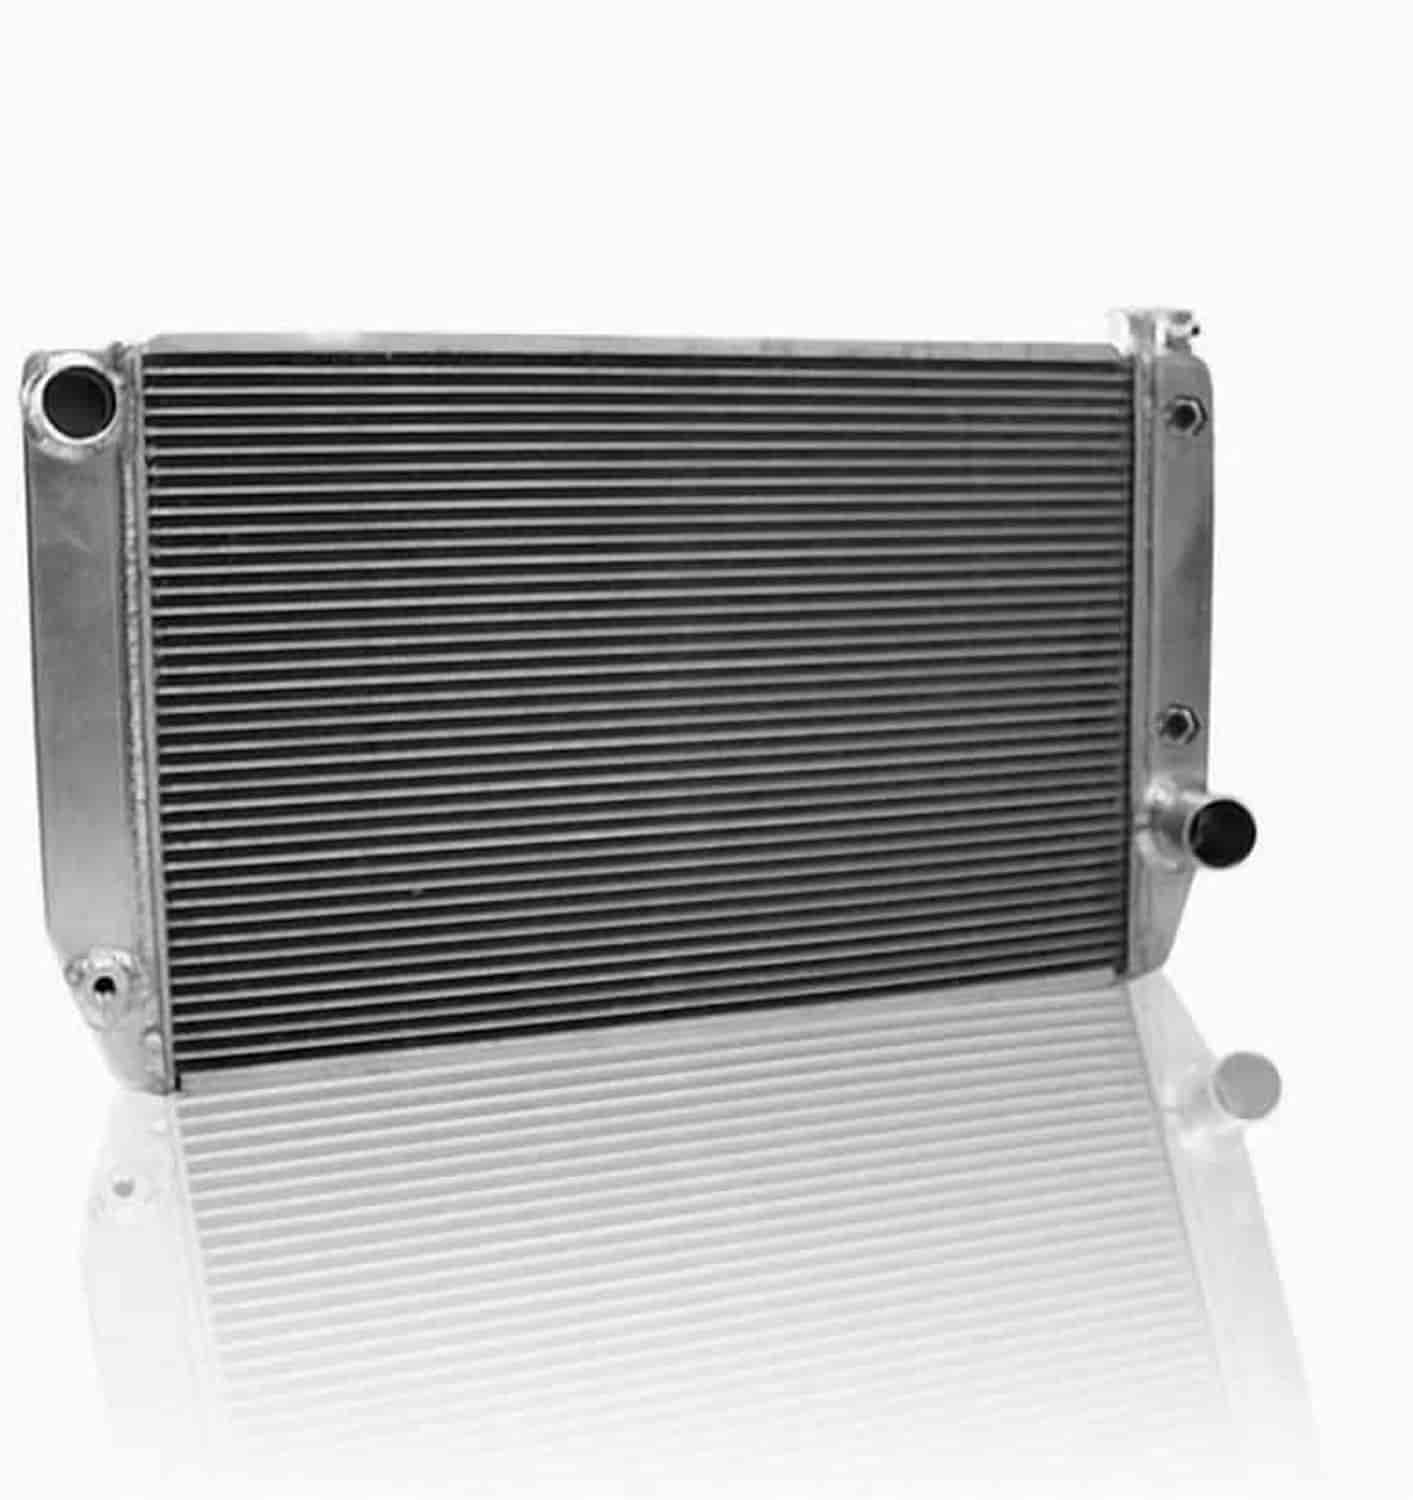 MegaCool Universal Fit Radiator Single Pass Crossflow Design 31" x 15.50" with Transmission Cooler